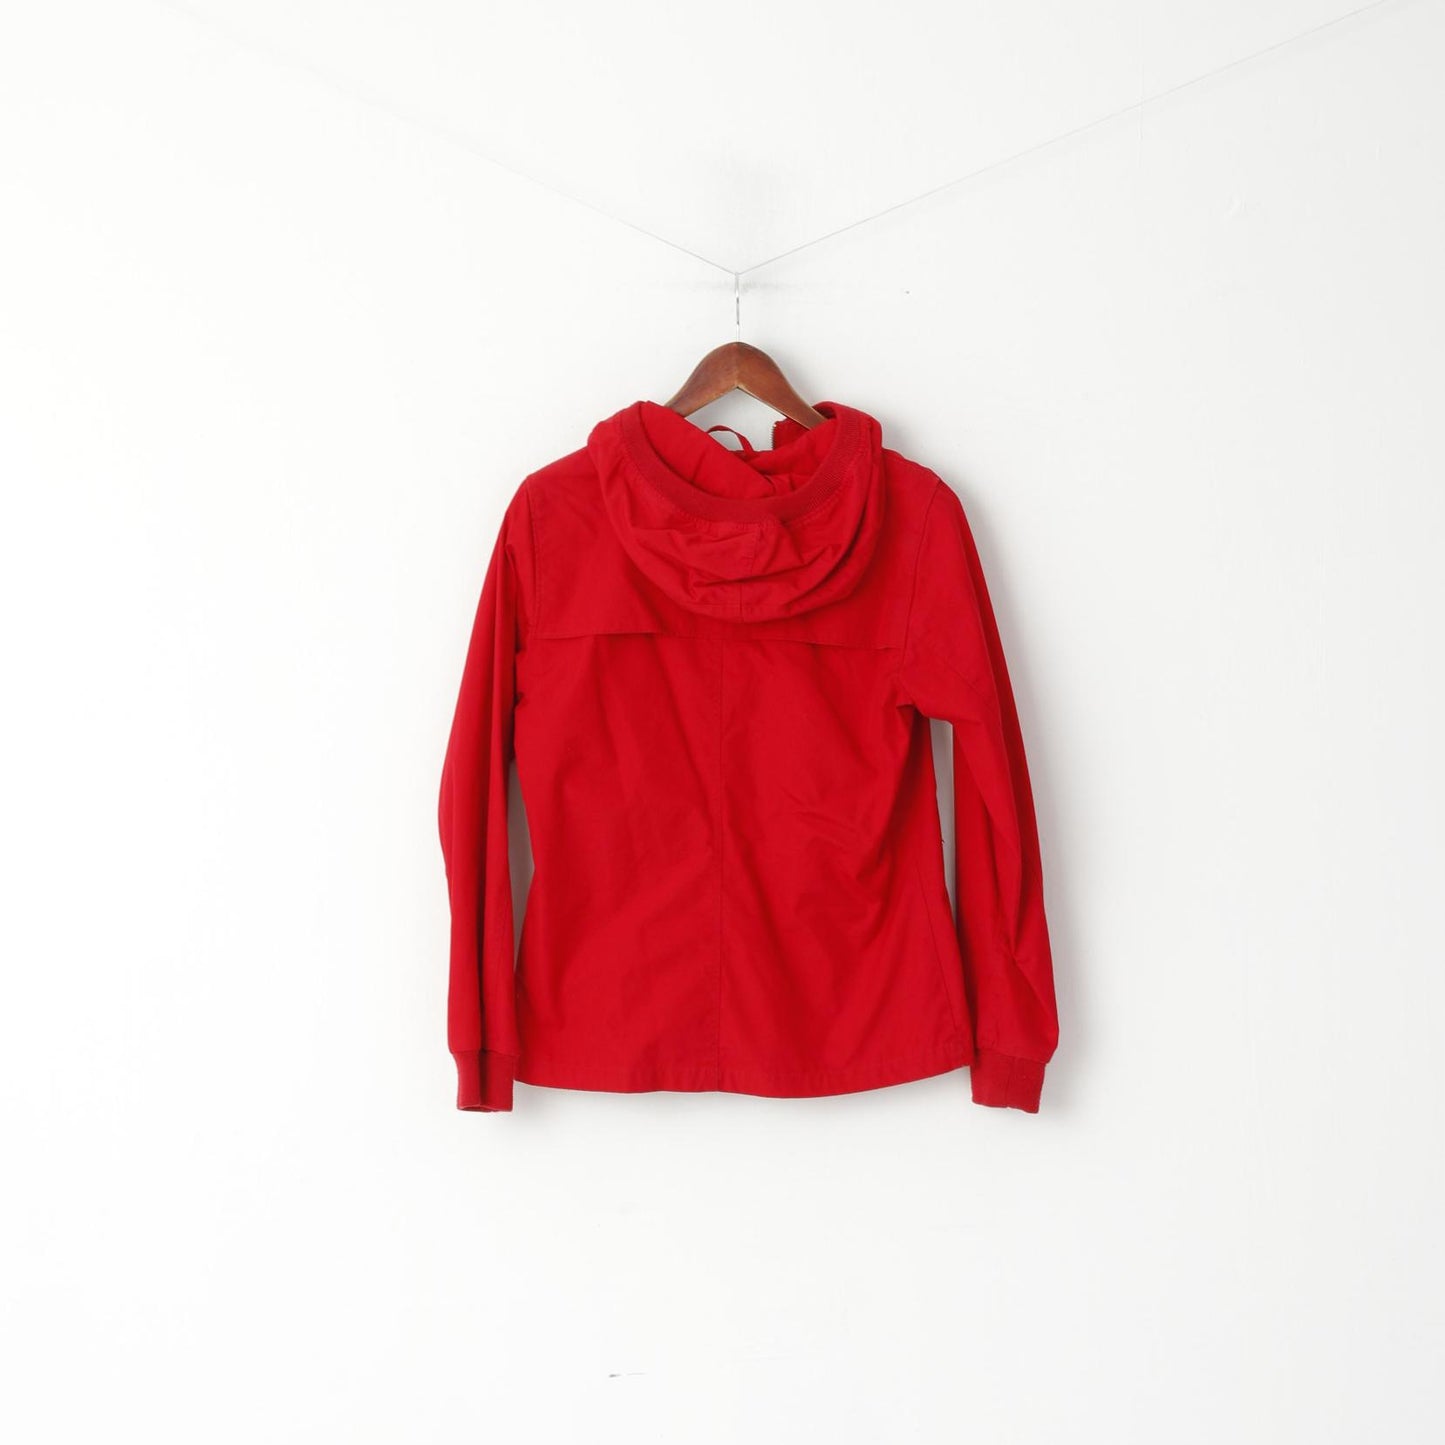 Peak Performance Women S Jacket Red Kasy J Cotton Blend Hooded Zip Up Top